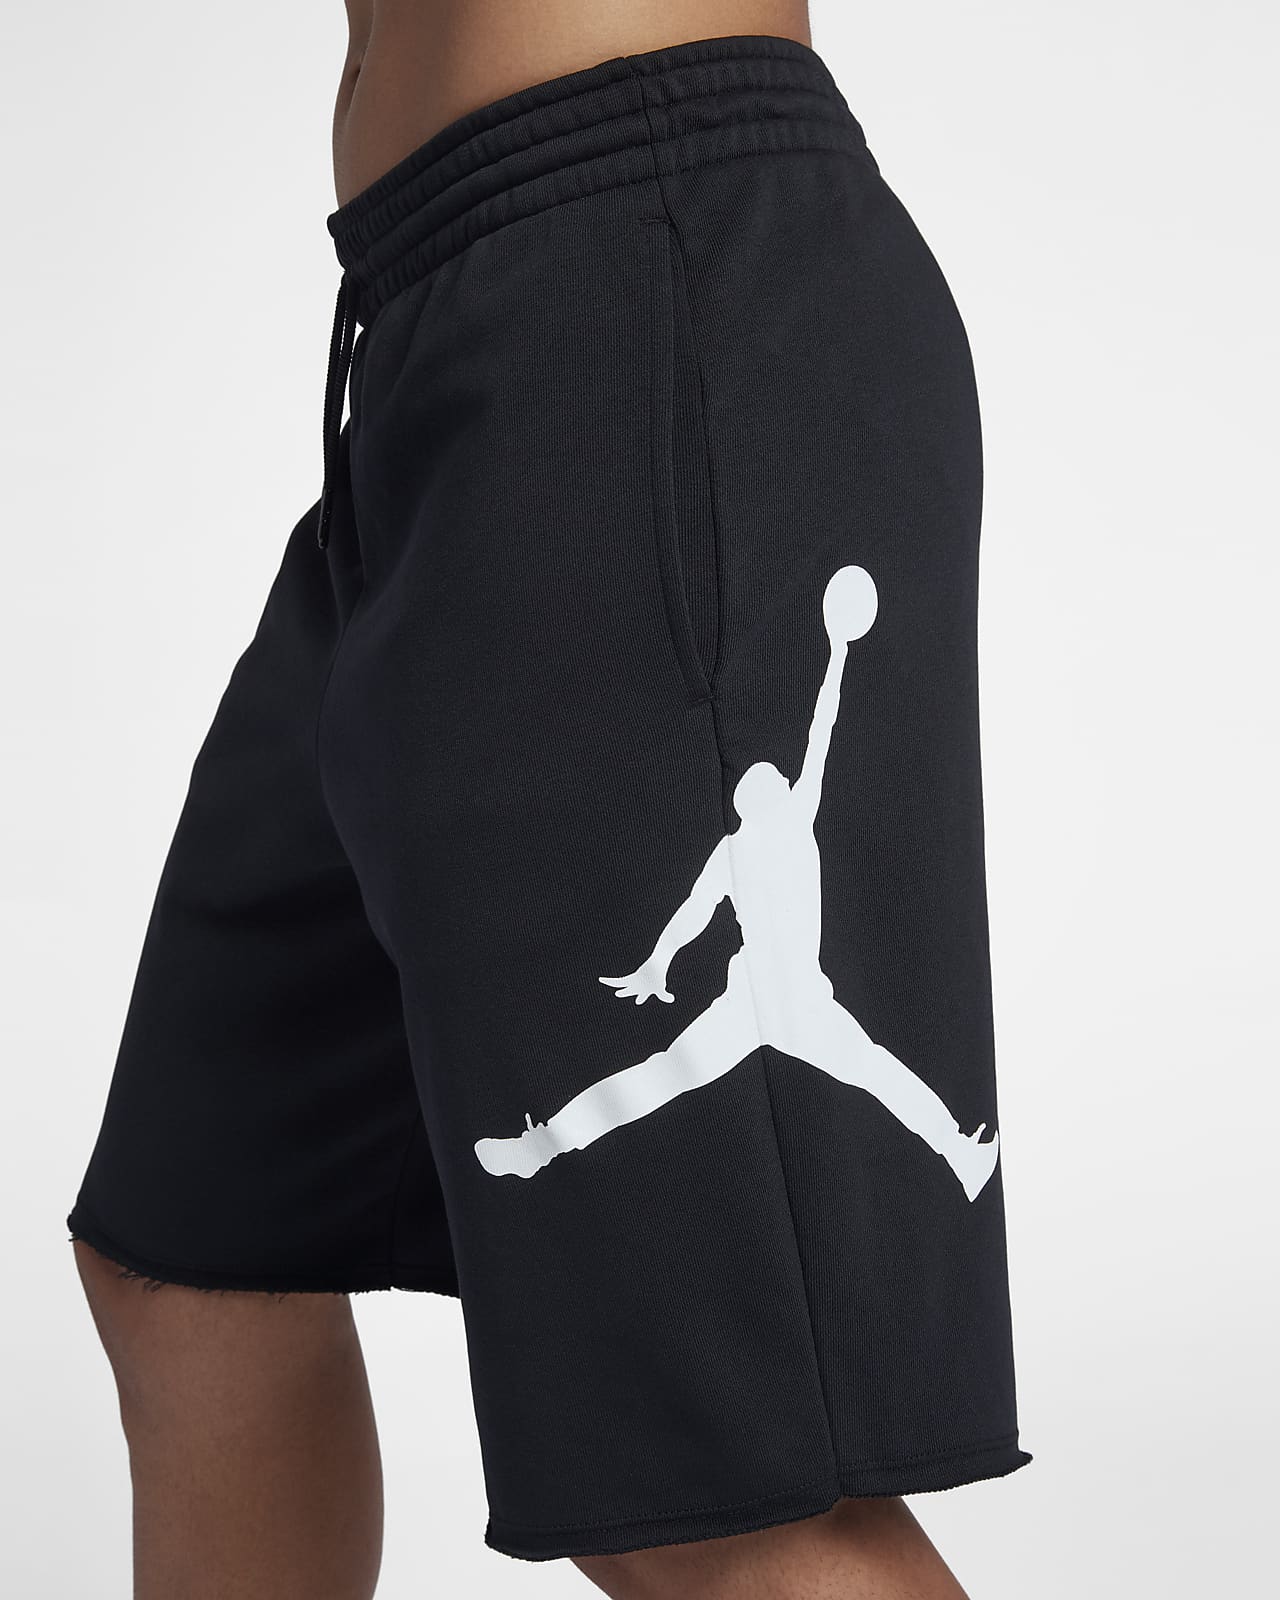 jumpman logo shorts